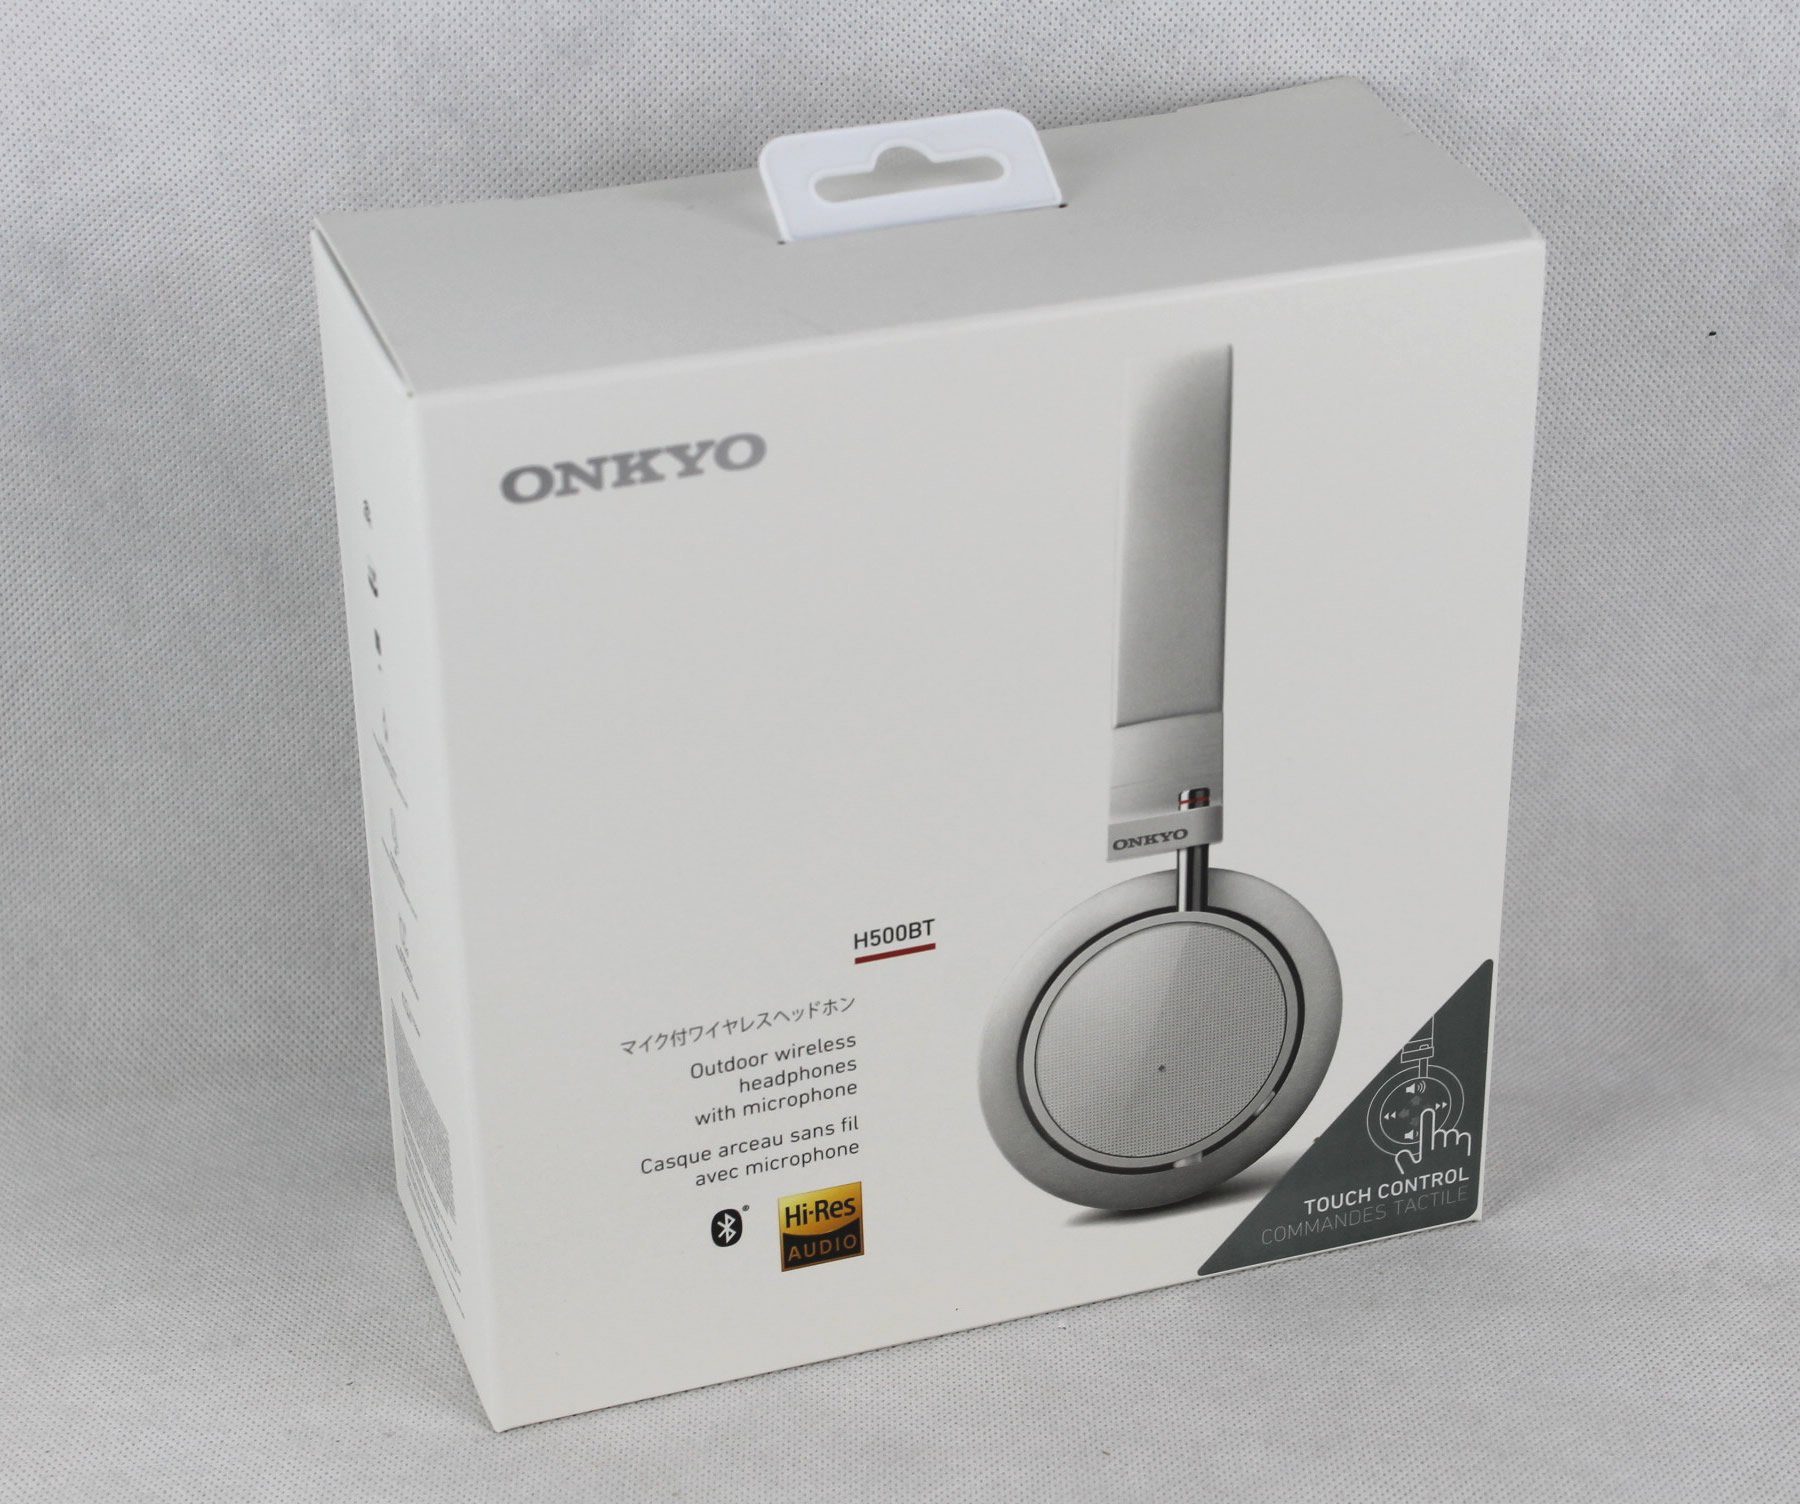 On-Ear H500BT mit Bluetooth-Kopfhörer Mikrofon Onkyo Bluetooth-Kopfhörer